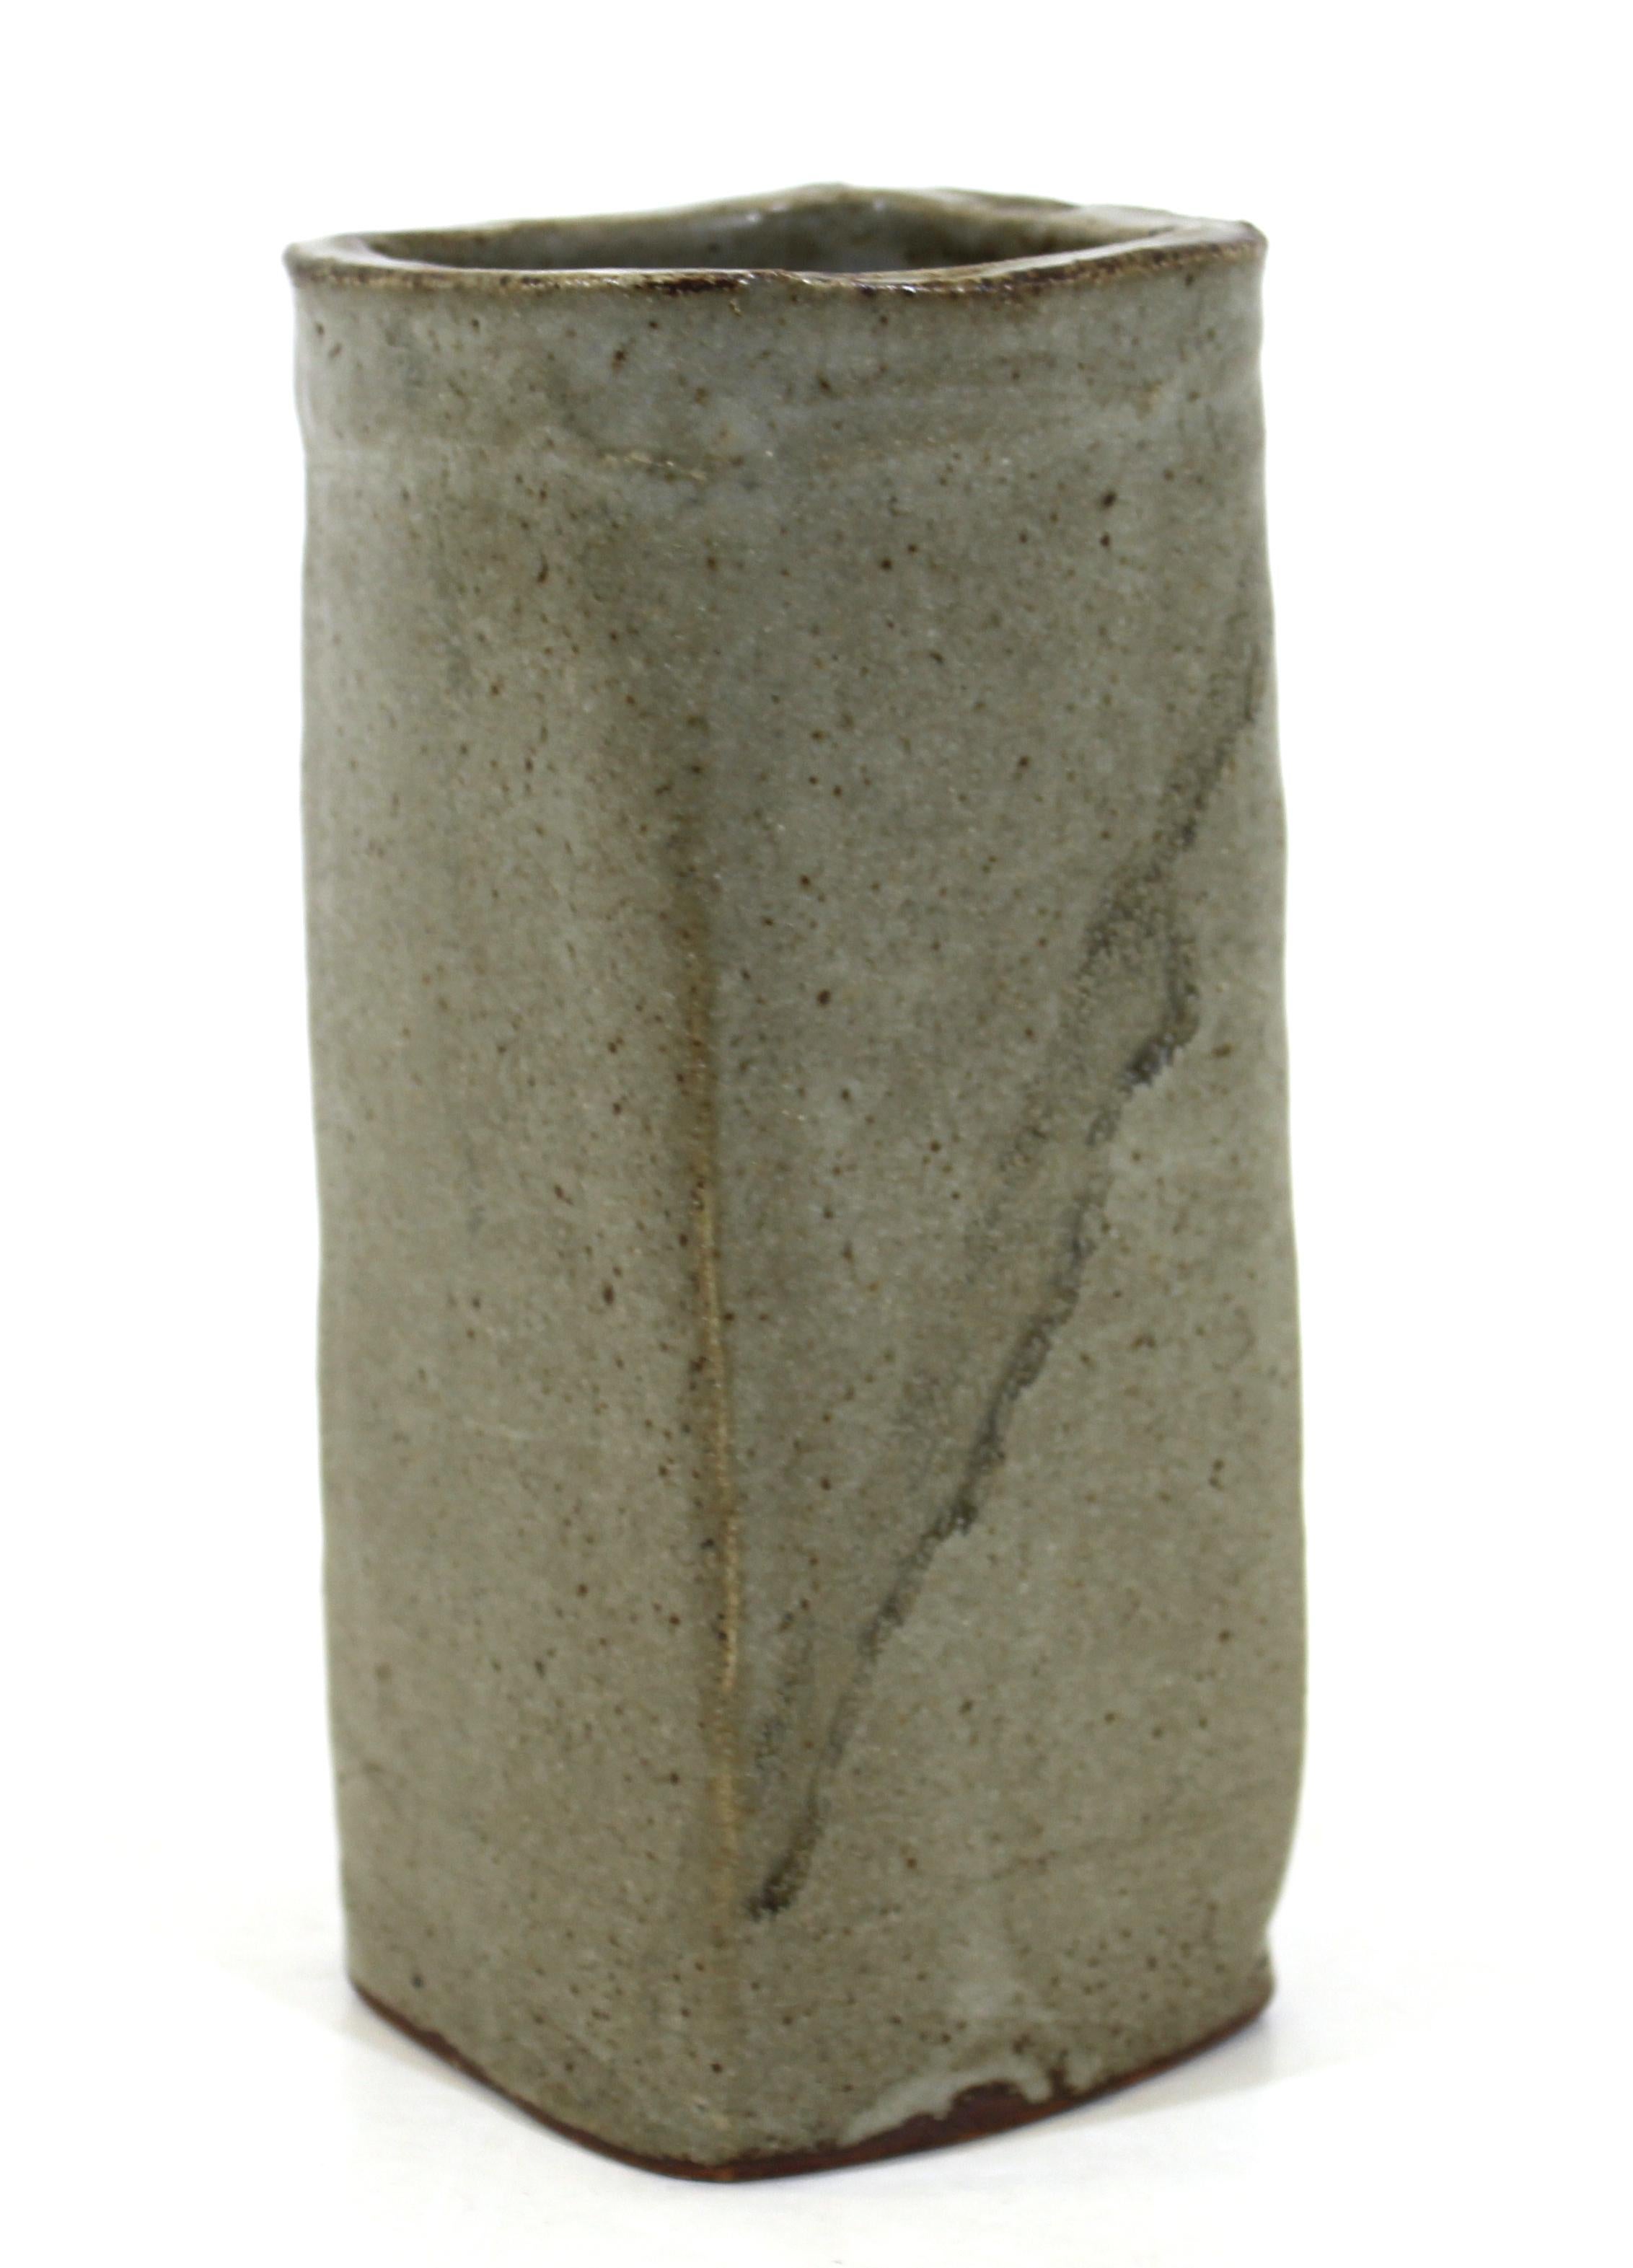 Japanese Mid-Century Modern art studio ceramic vase with square base and natural glaze, illegible mark on the bottom.